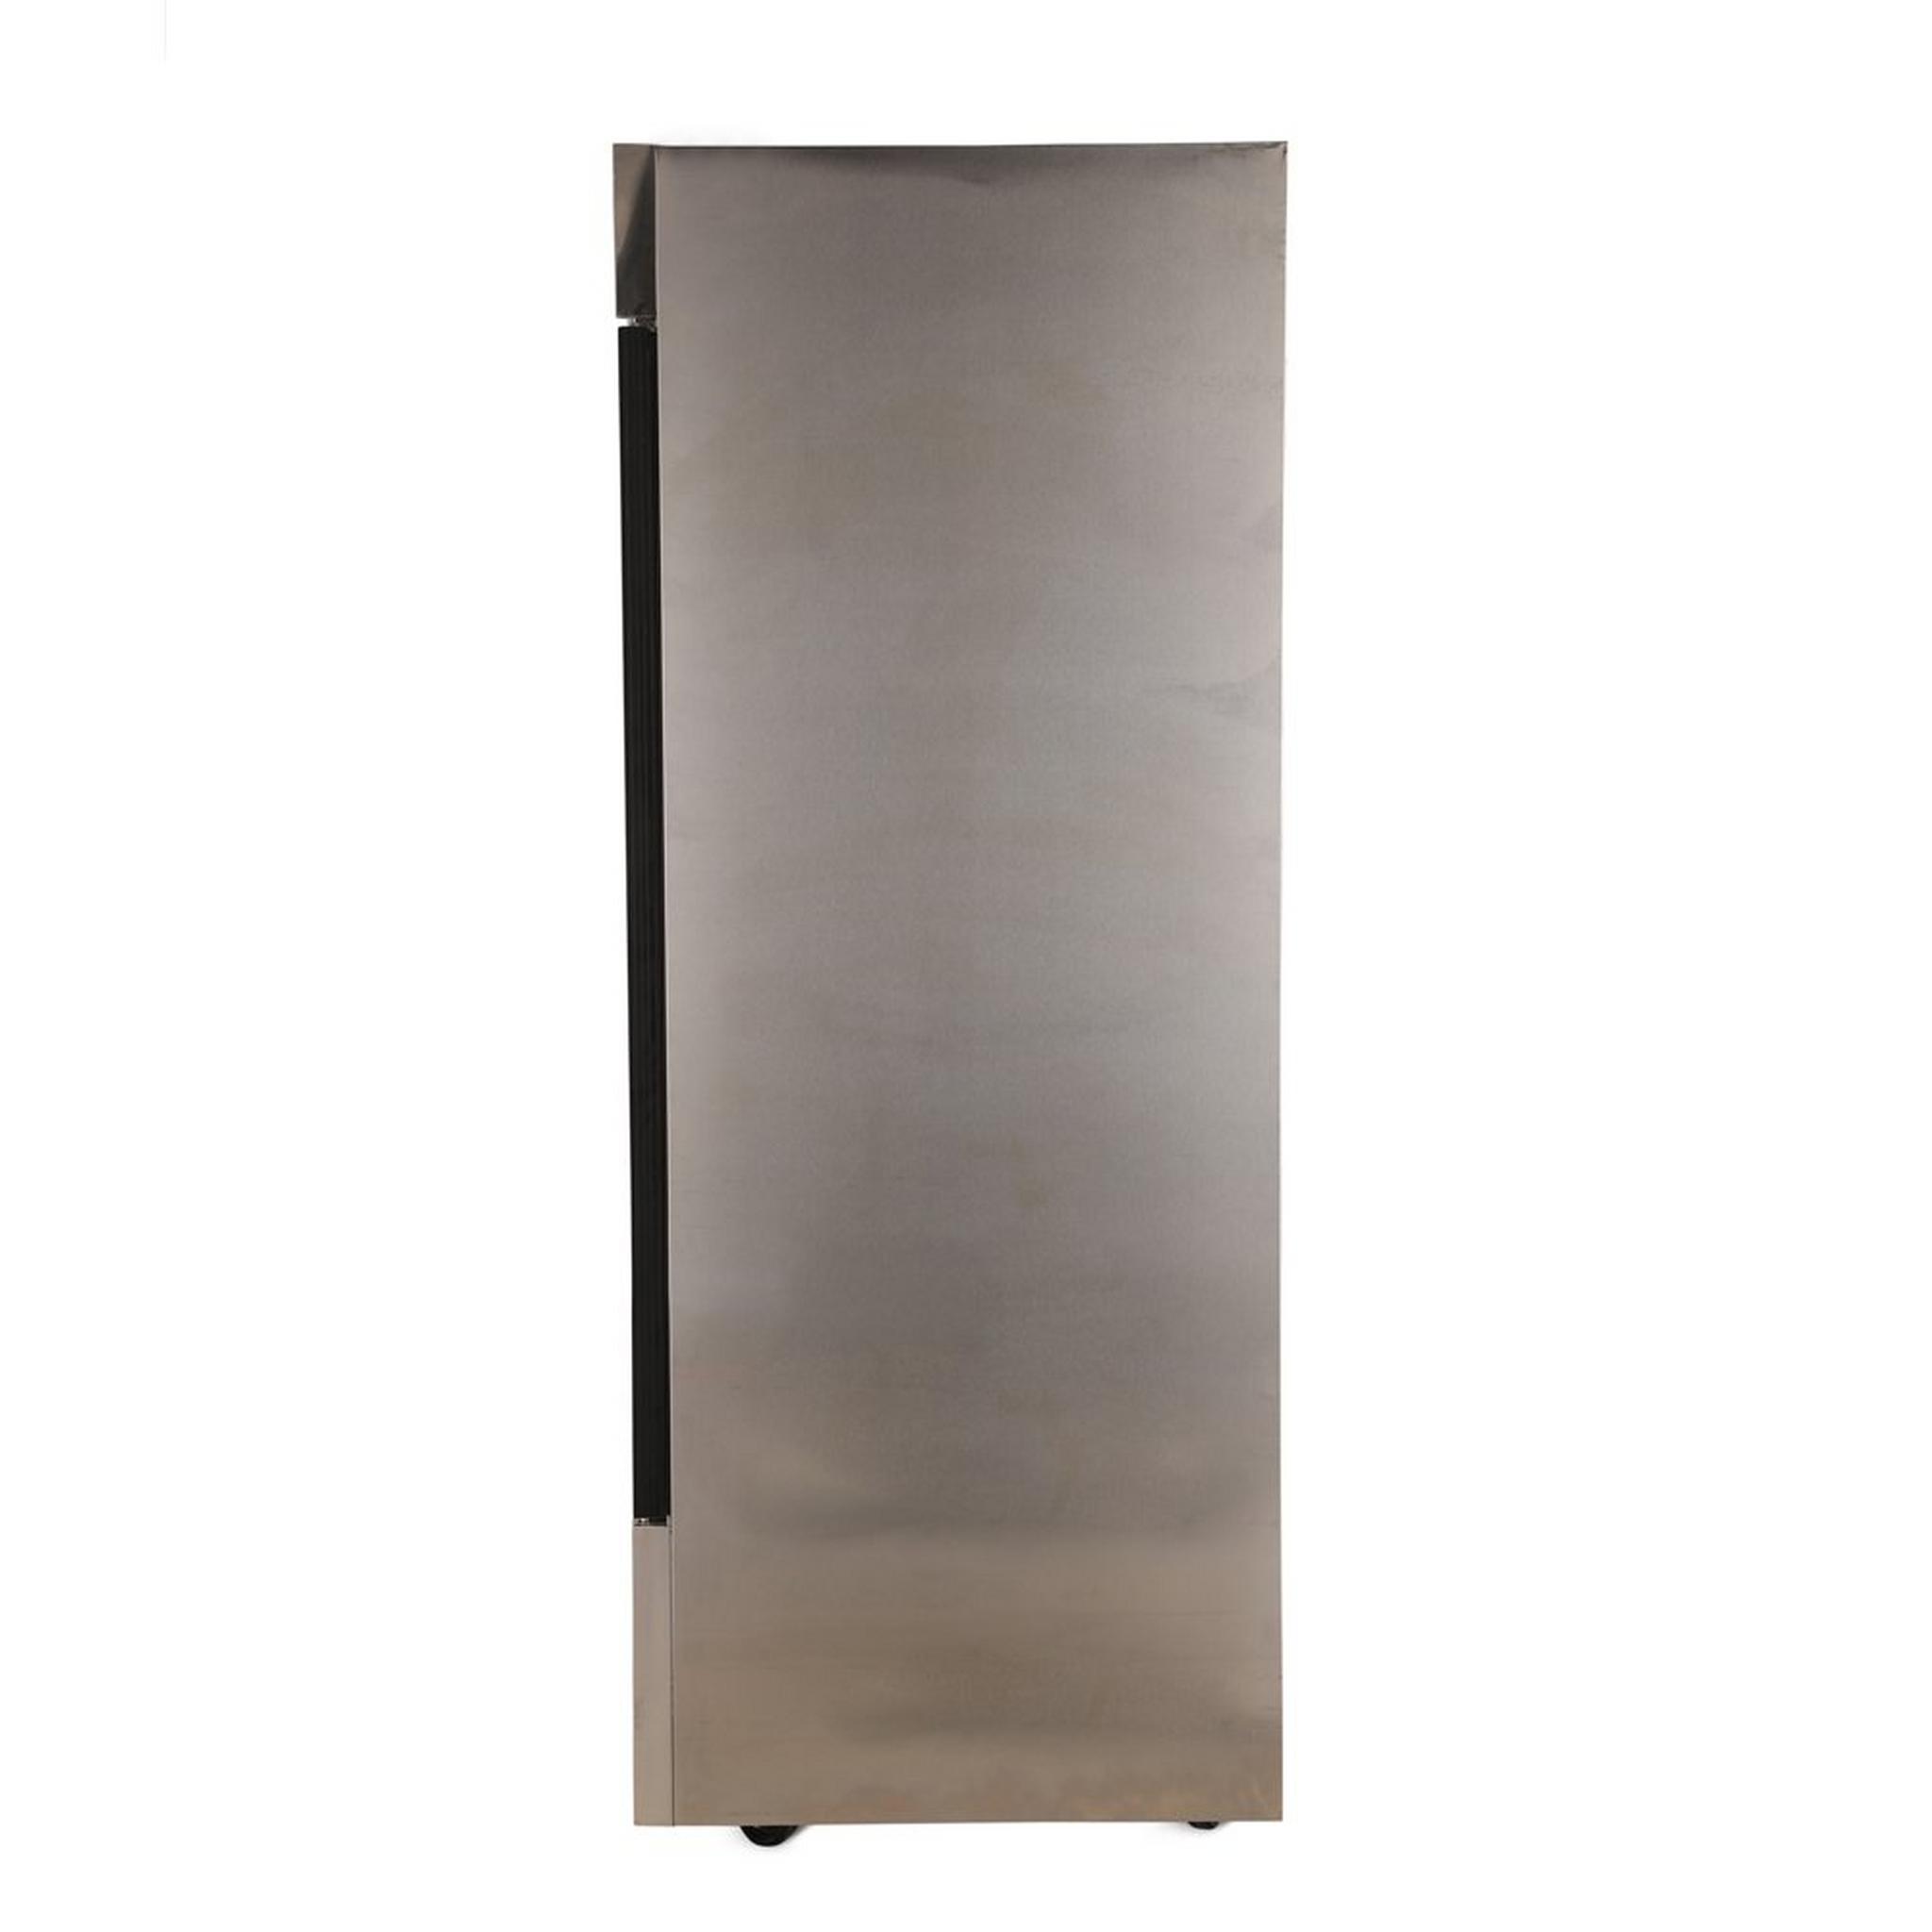 Wansa Window Refrigetor, 24CFT, 680-Liters, 1GDS - Stainless Steel